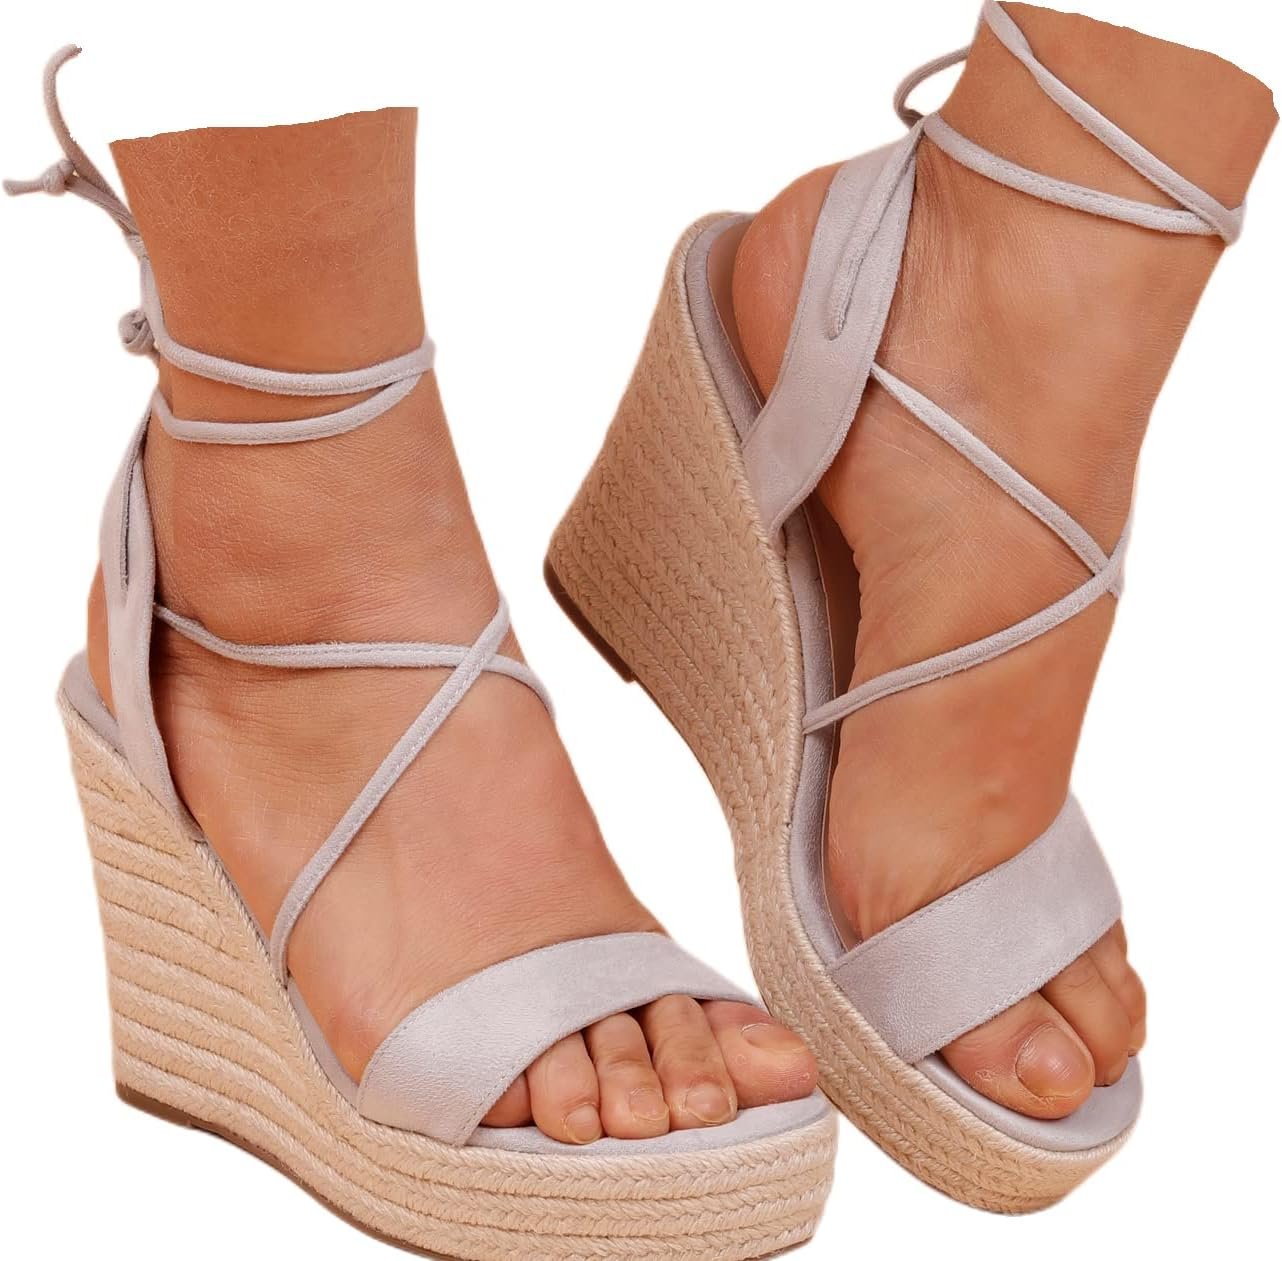 SUMOJIU Womens Wedge Platform Espadrille Open Toe Lace-Up Sandals, Cross Strap Wedge Sandals Summer Espadrilles Ankle Strap Buckle Platform Sandals